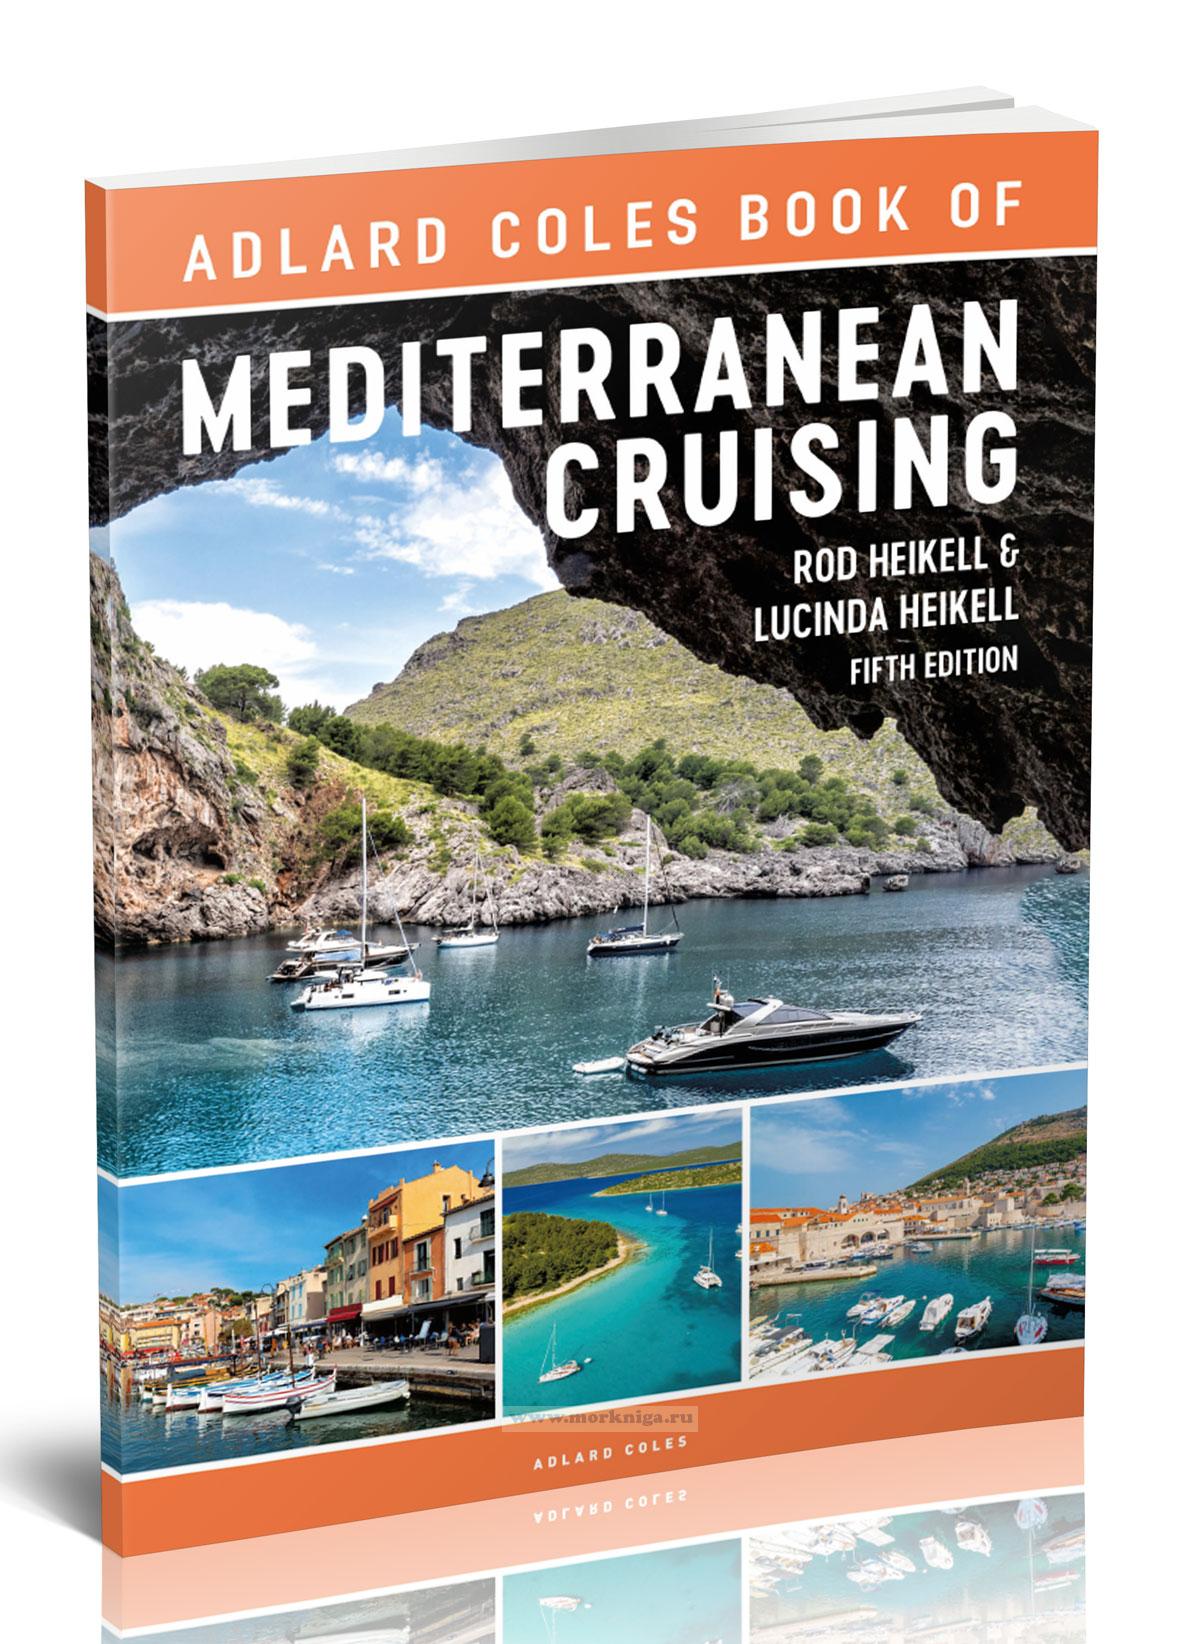 The Adlard Coles Book of Mediterranean Cruising 5th edition/Особенности средиземноморского яхтинга 5-е издание